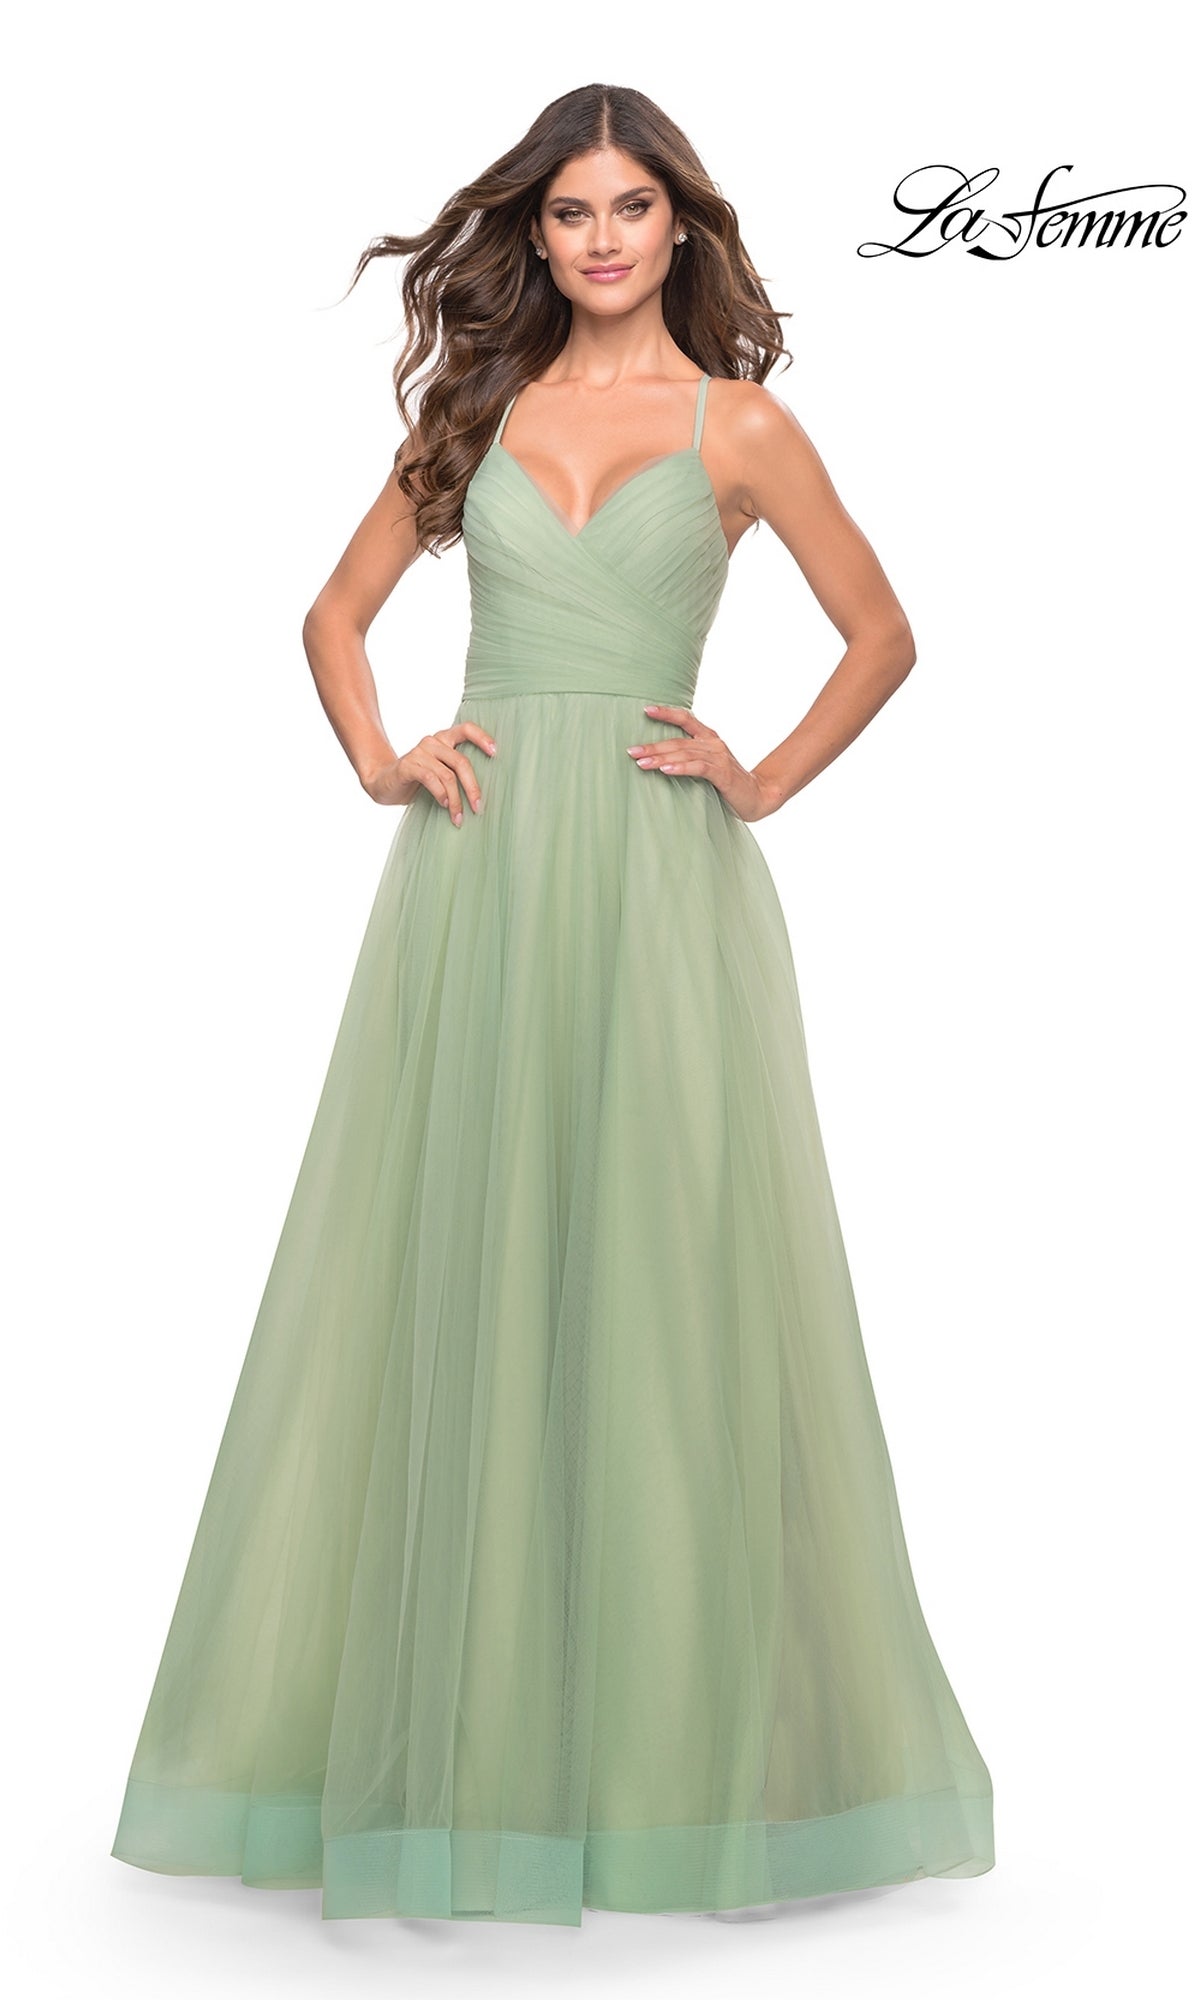  La Femme 31501 Formal Prom Dress